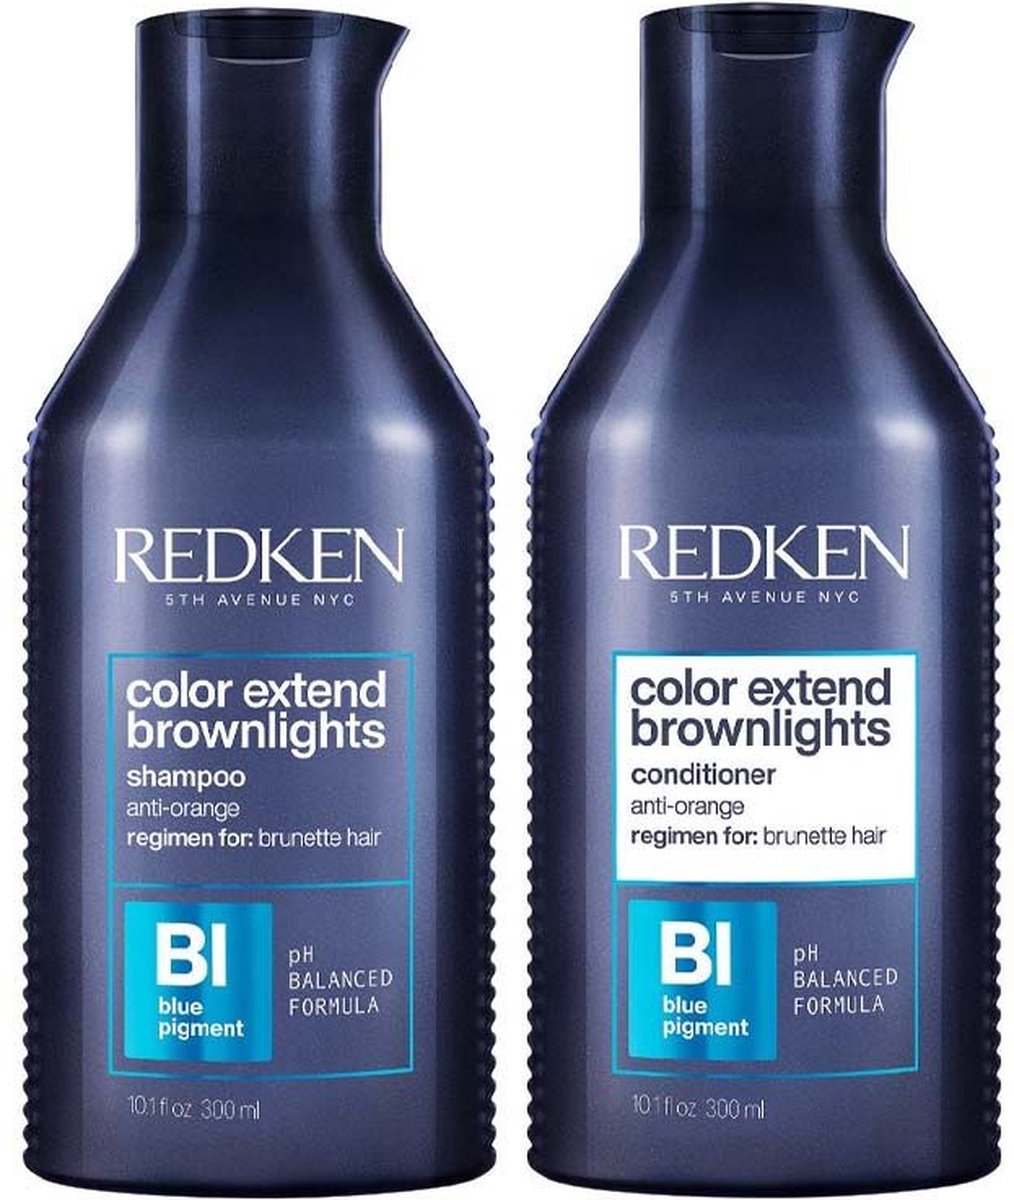 Redken Color Extend Brownlights Shampoo 300ml + Conditioner 300ml